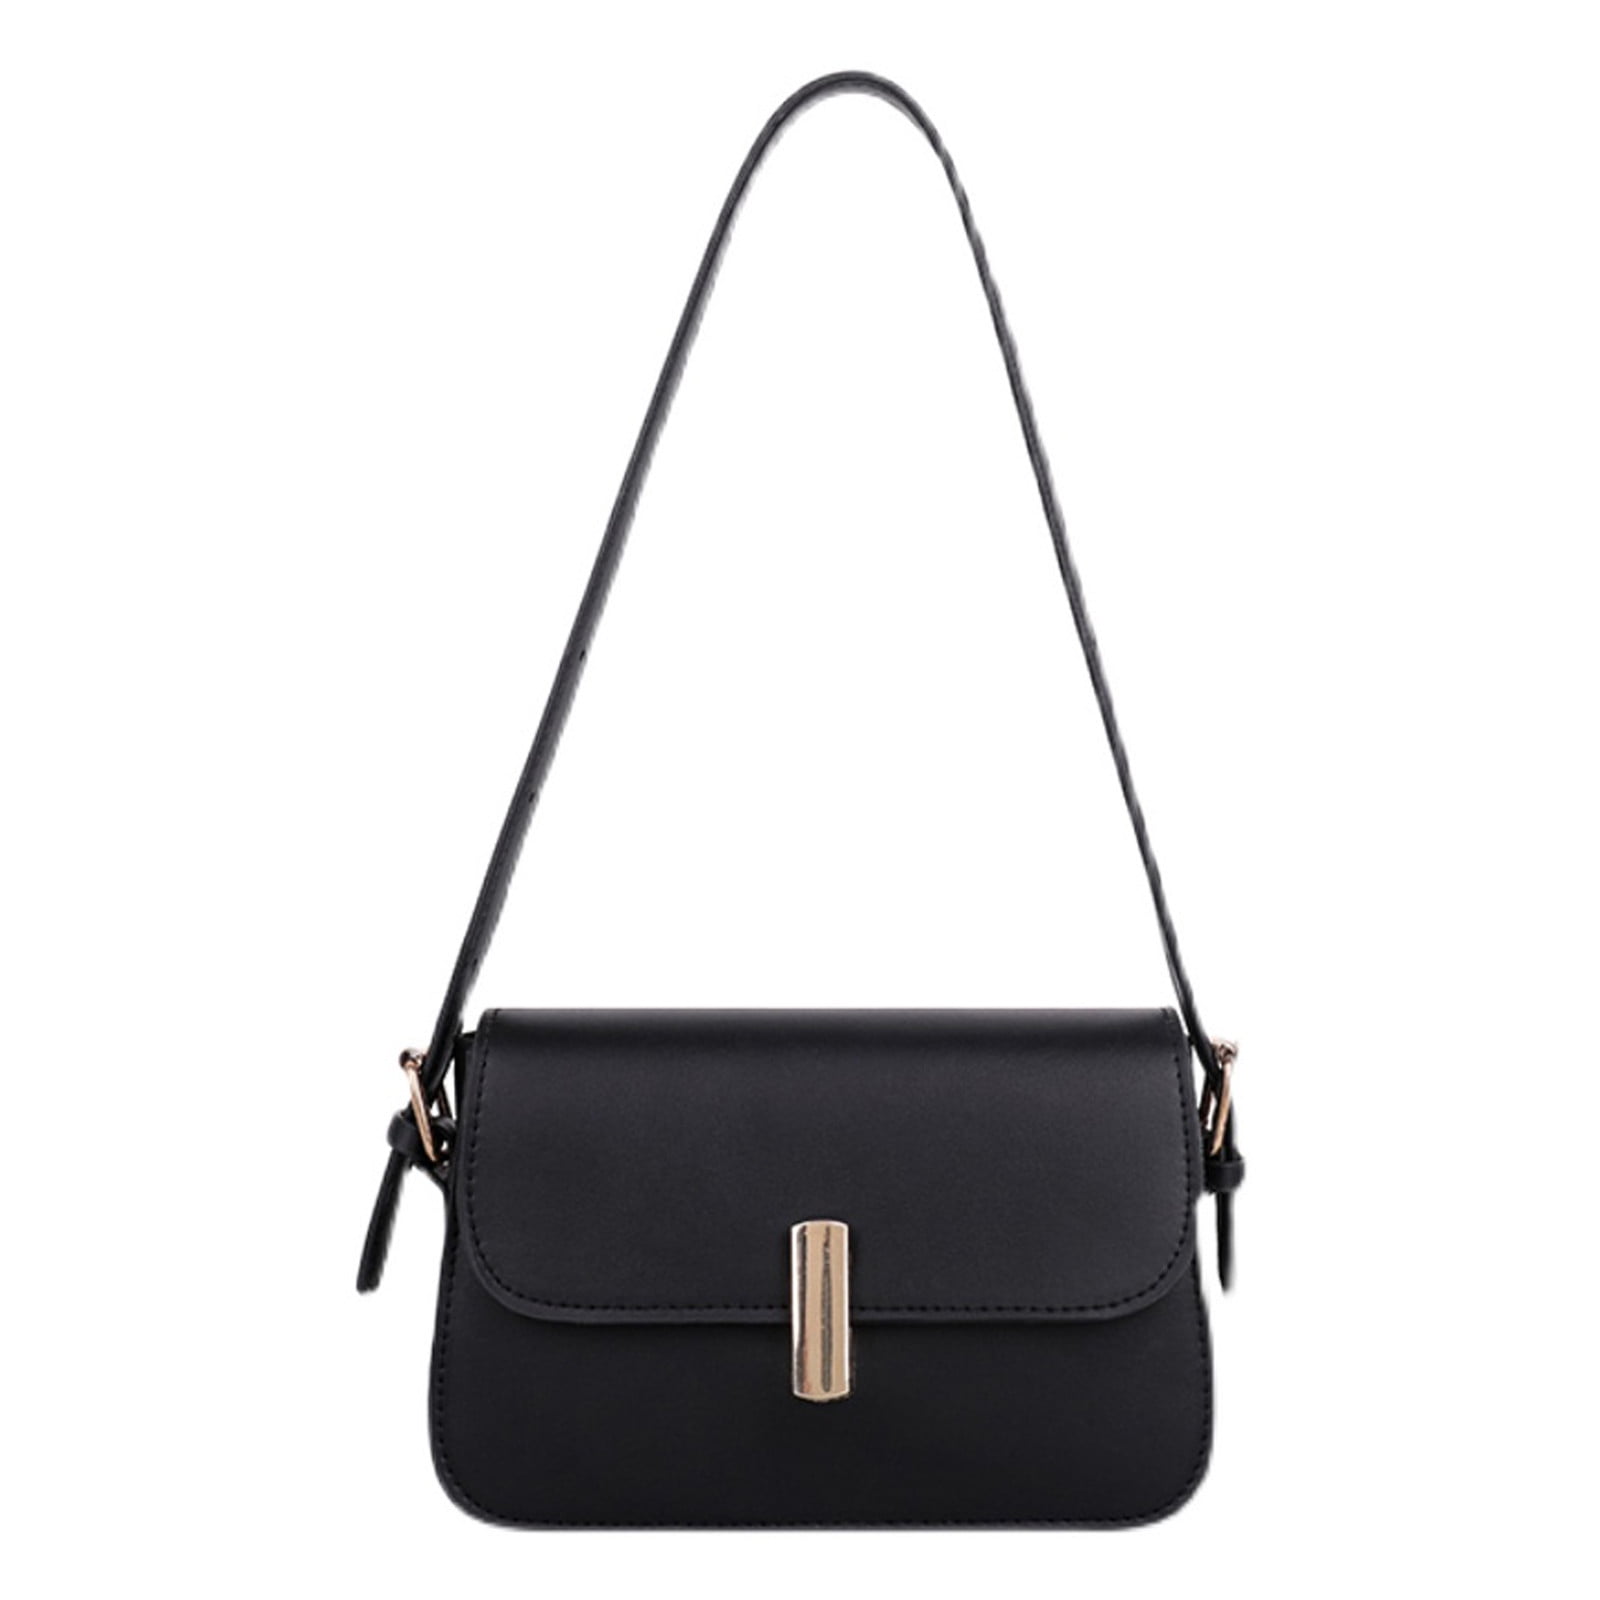 Zhaghmin Medium Size Purses and Handbags Casual Leather Messenger Bag Large Capacity Handbag Fashion Womens Bag Tote Organizer Car Net Pocket Handbag